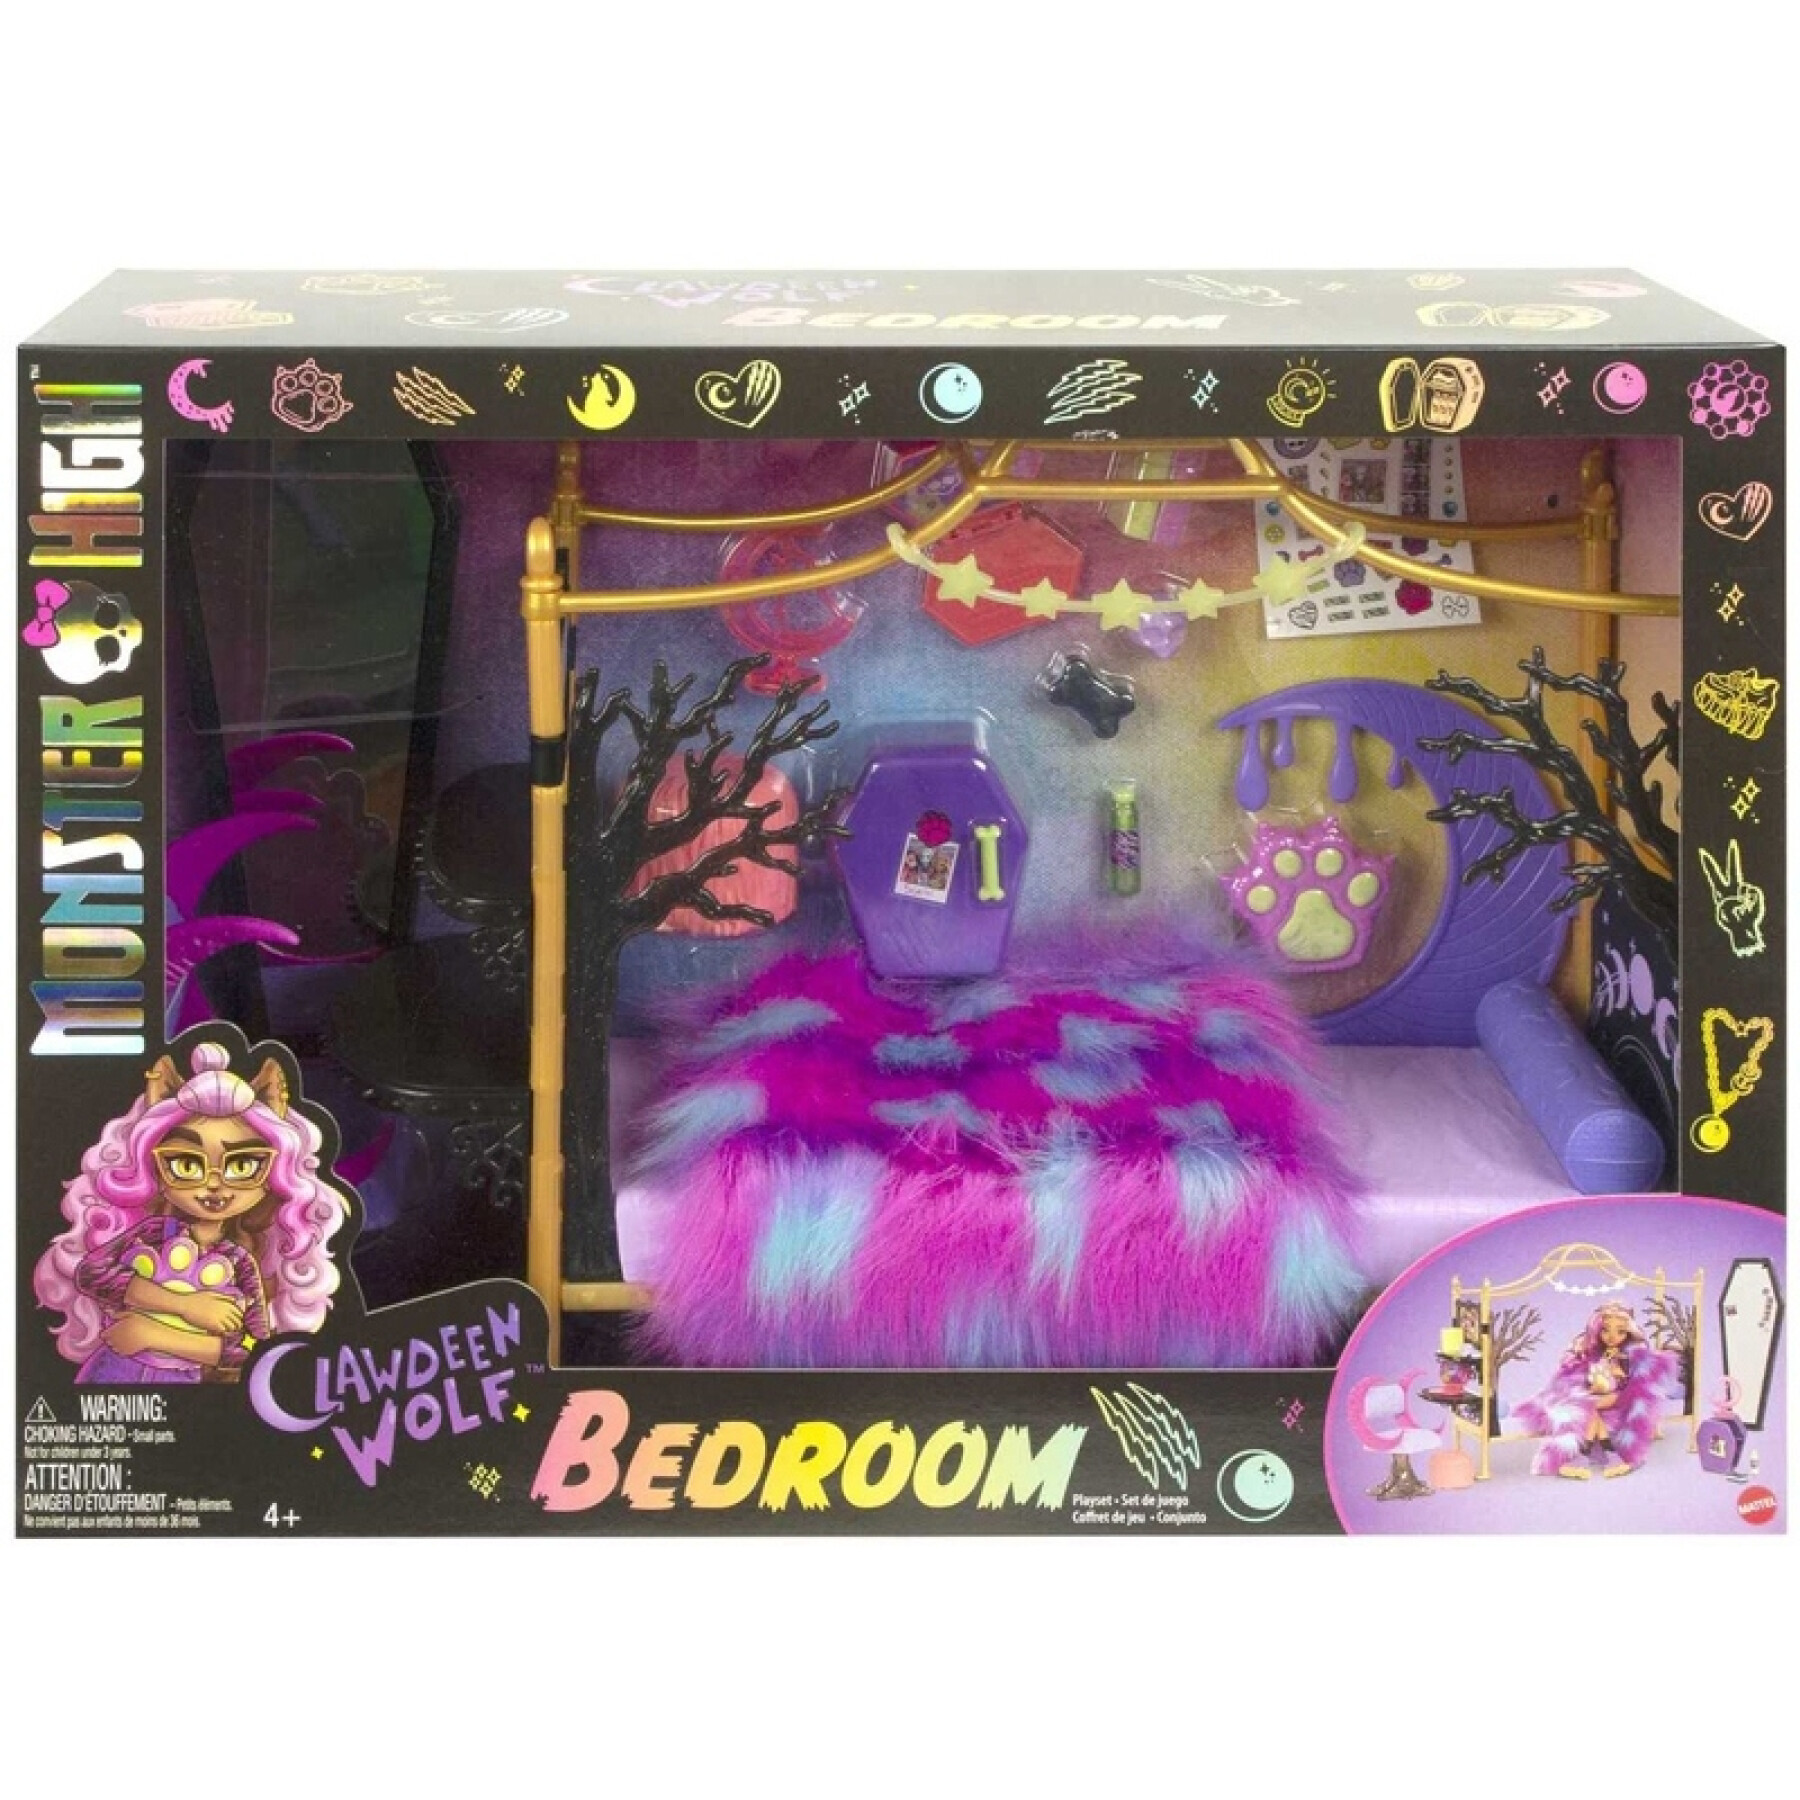 Accessoires voor clawdeen slaapkamerpoppen Mattel France Monster High